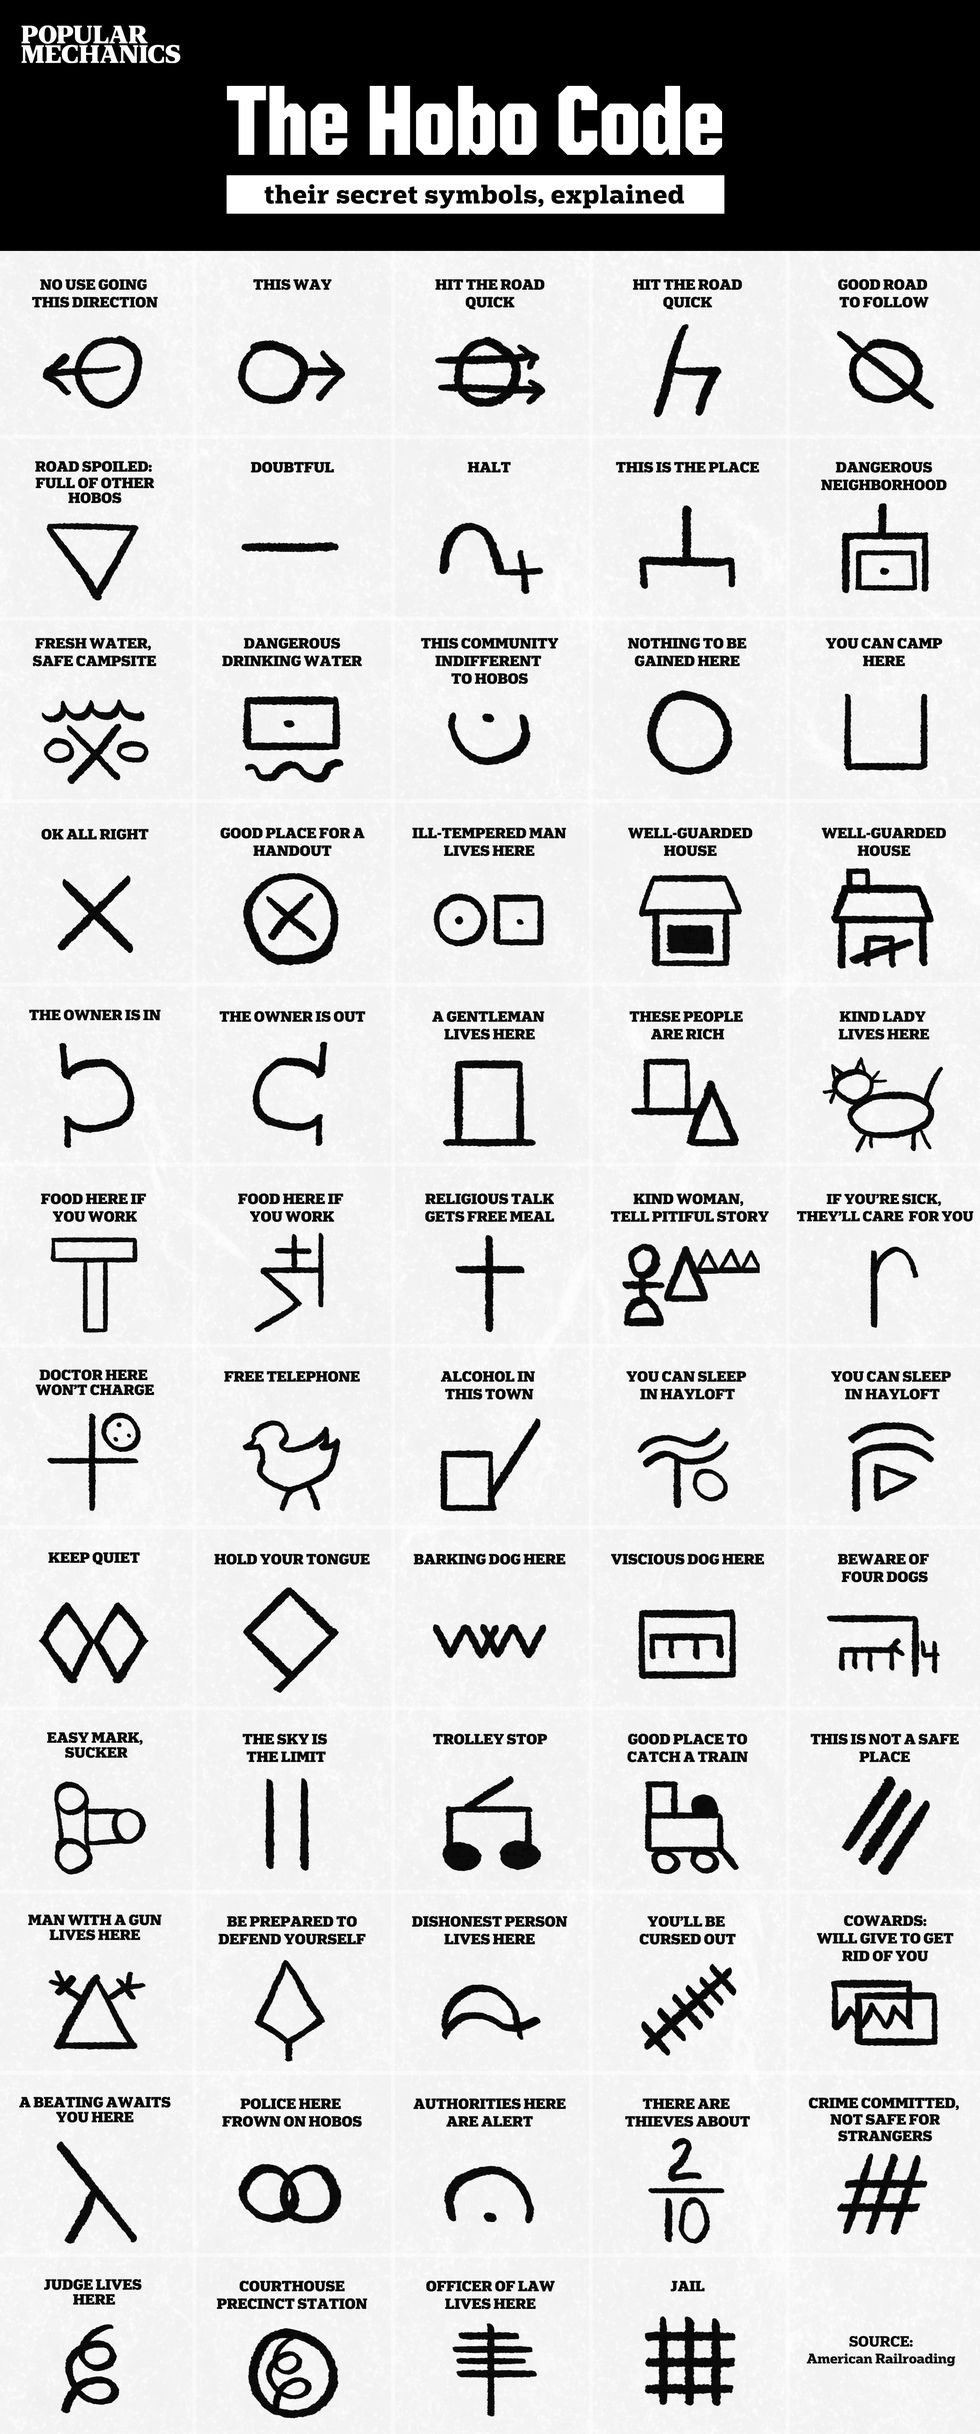 the hobo code, their secret symbols explained